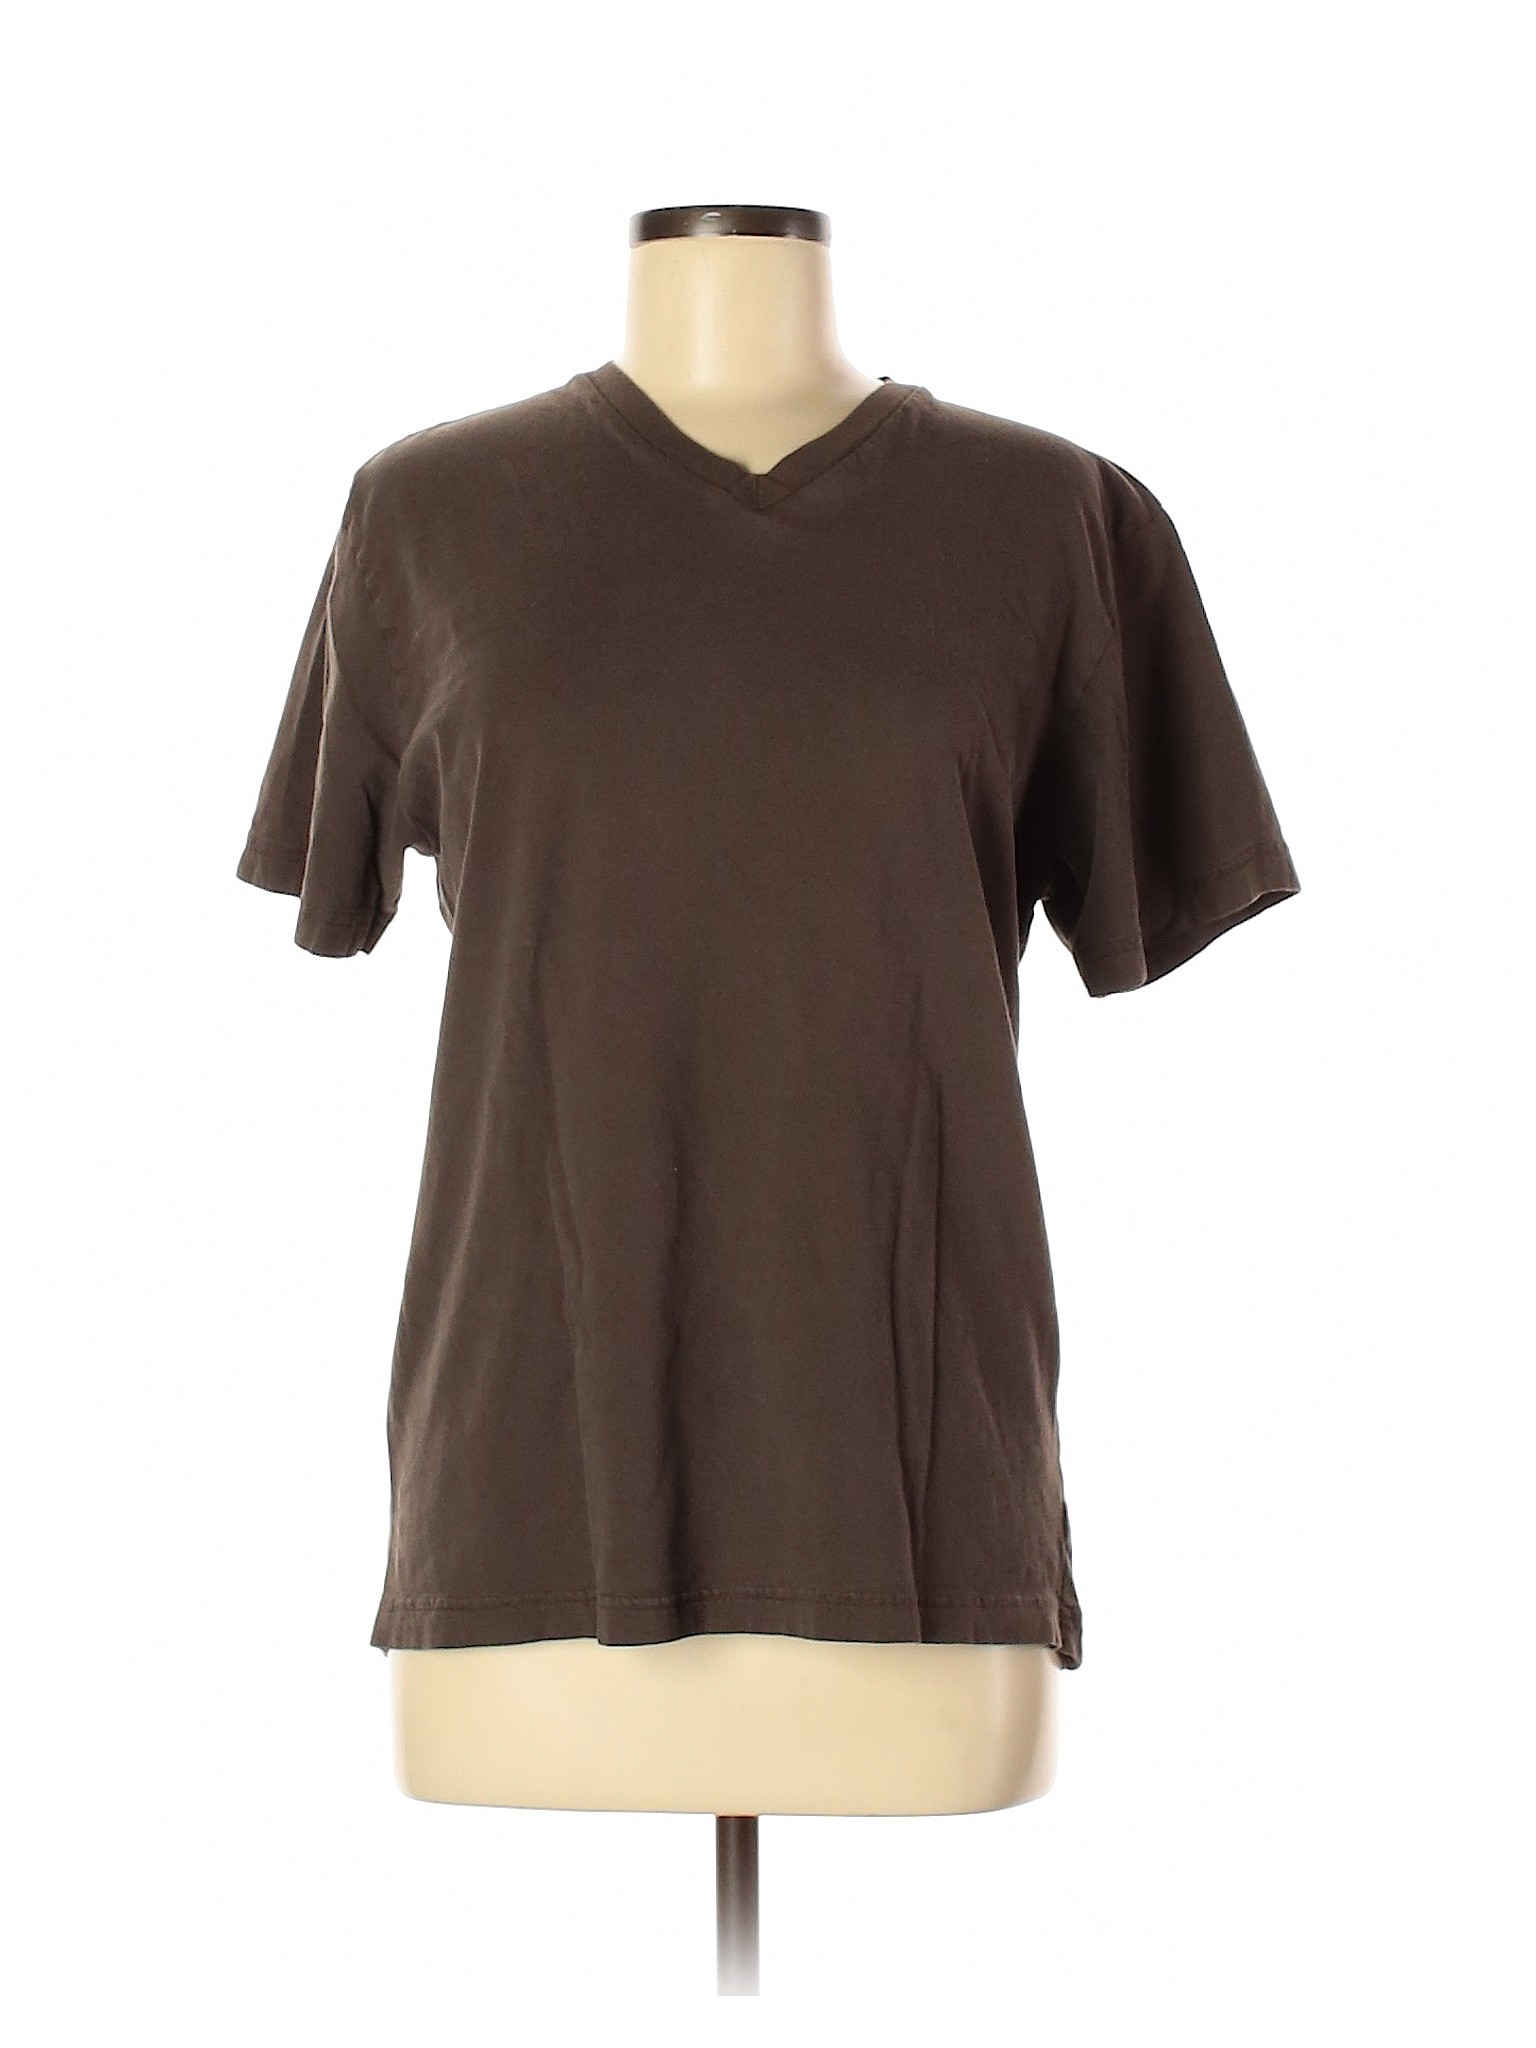 Old Navy Women Brown Short Sleeve T-Shirt M | eBay